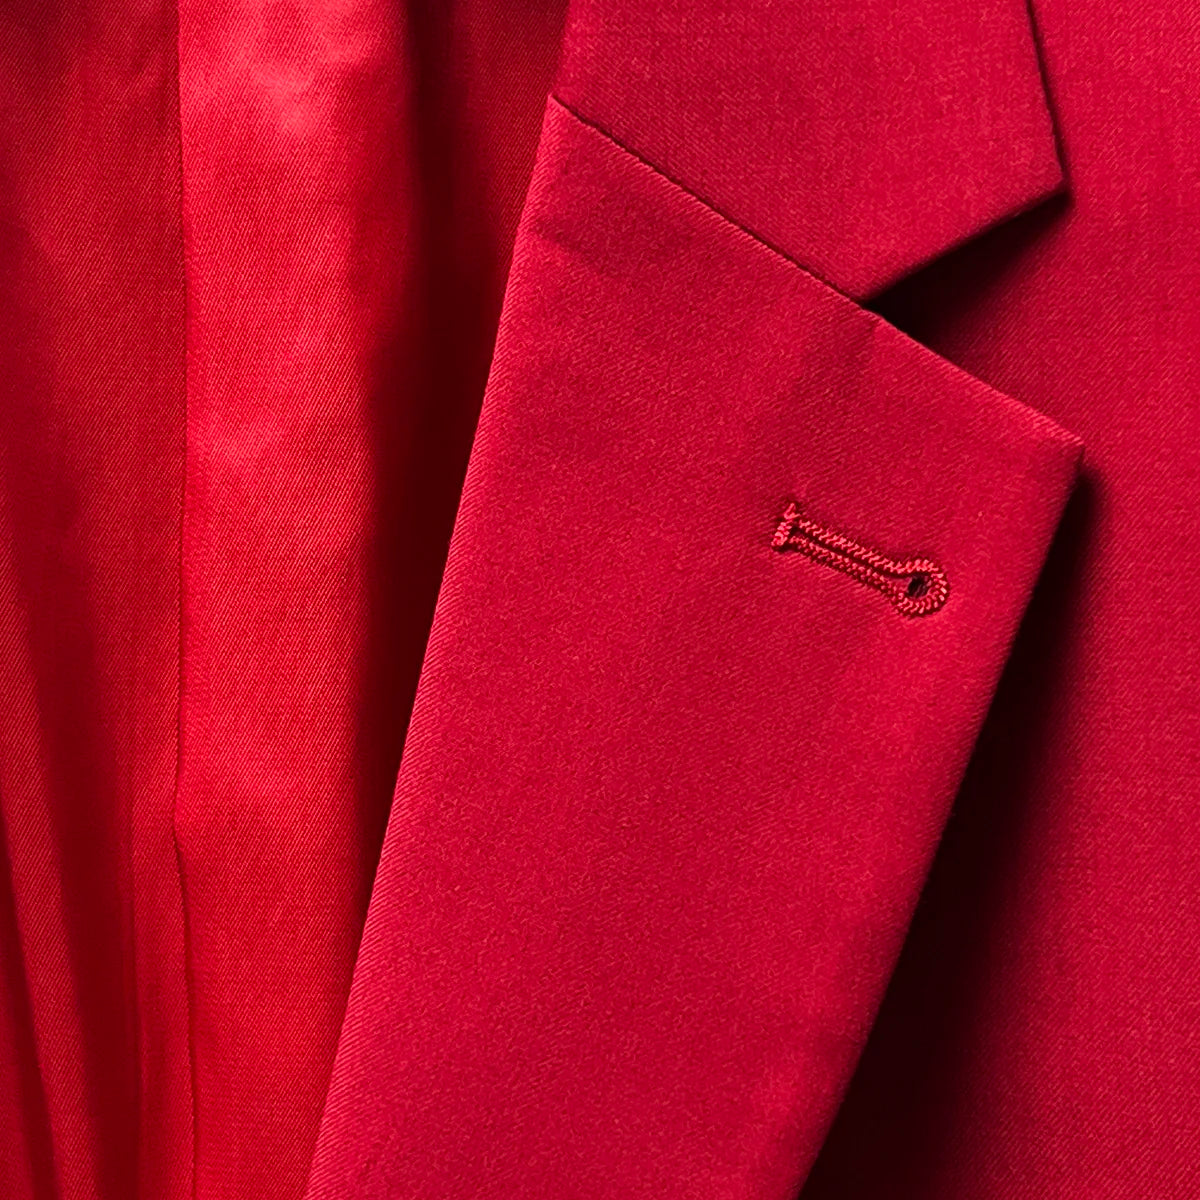 Lapel buttonhole showcasing a classic tailoring detail on a scarlet red, solid plain color suit.